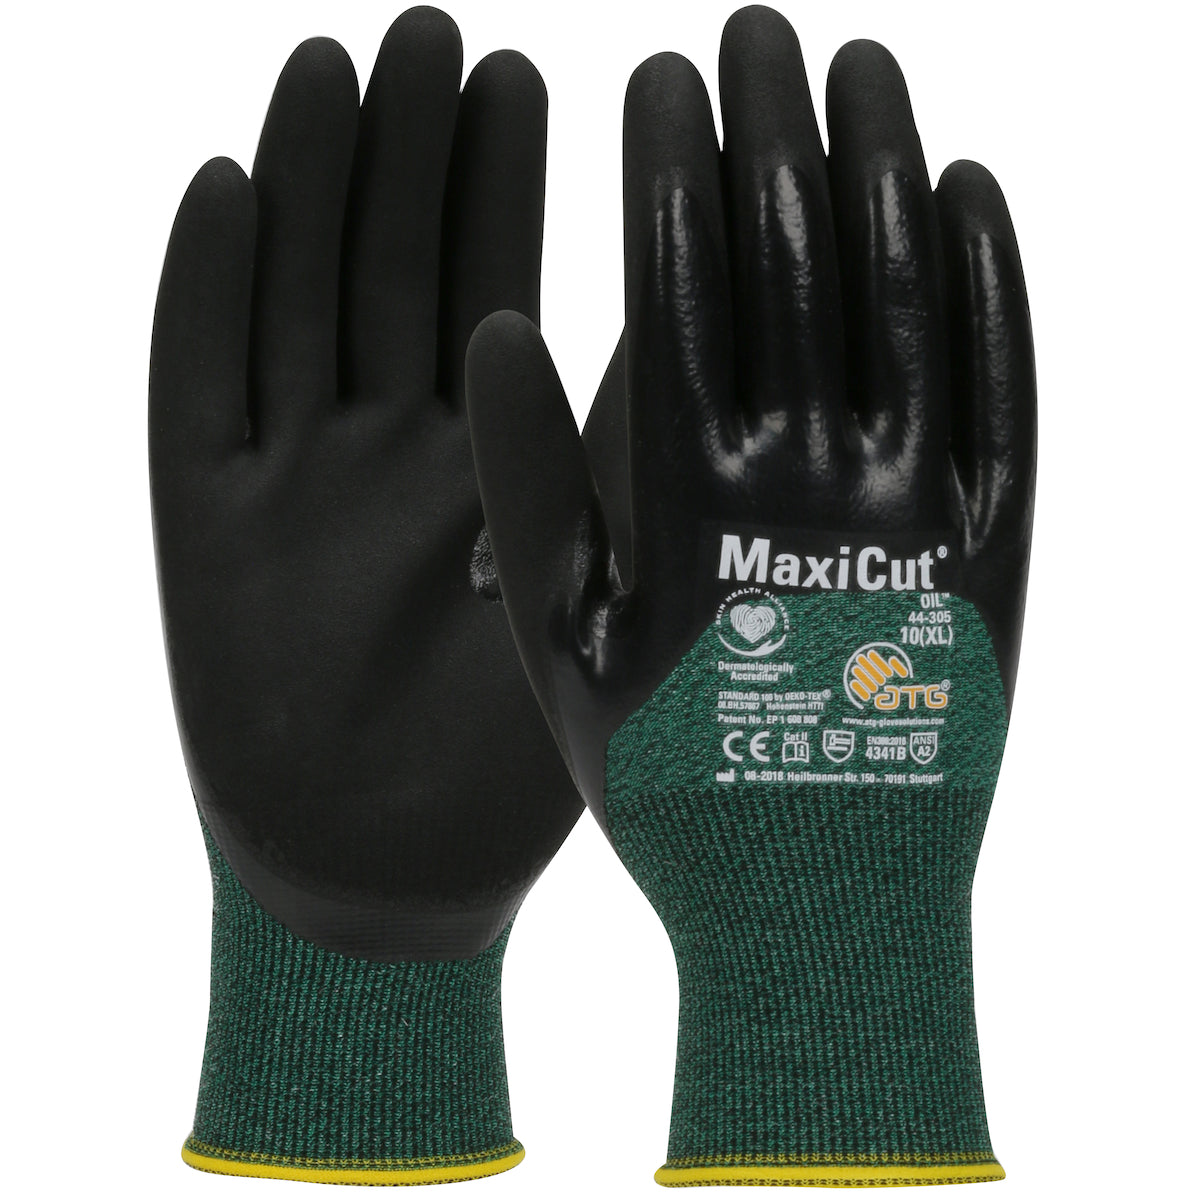 MaxiCut® Oil™ Nitrile Coated MicroFoam Palm and Knuckle Glove